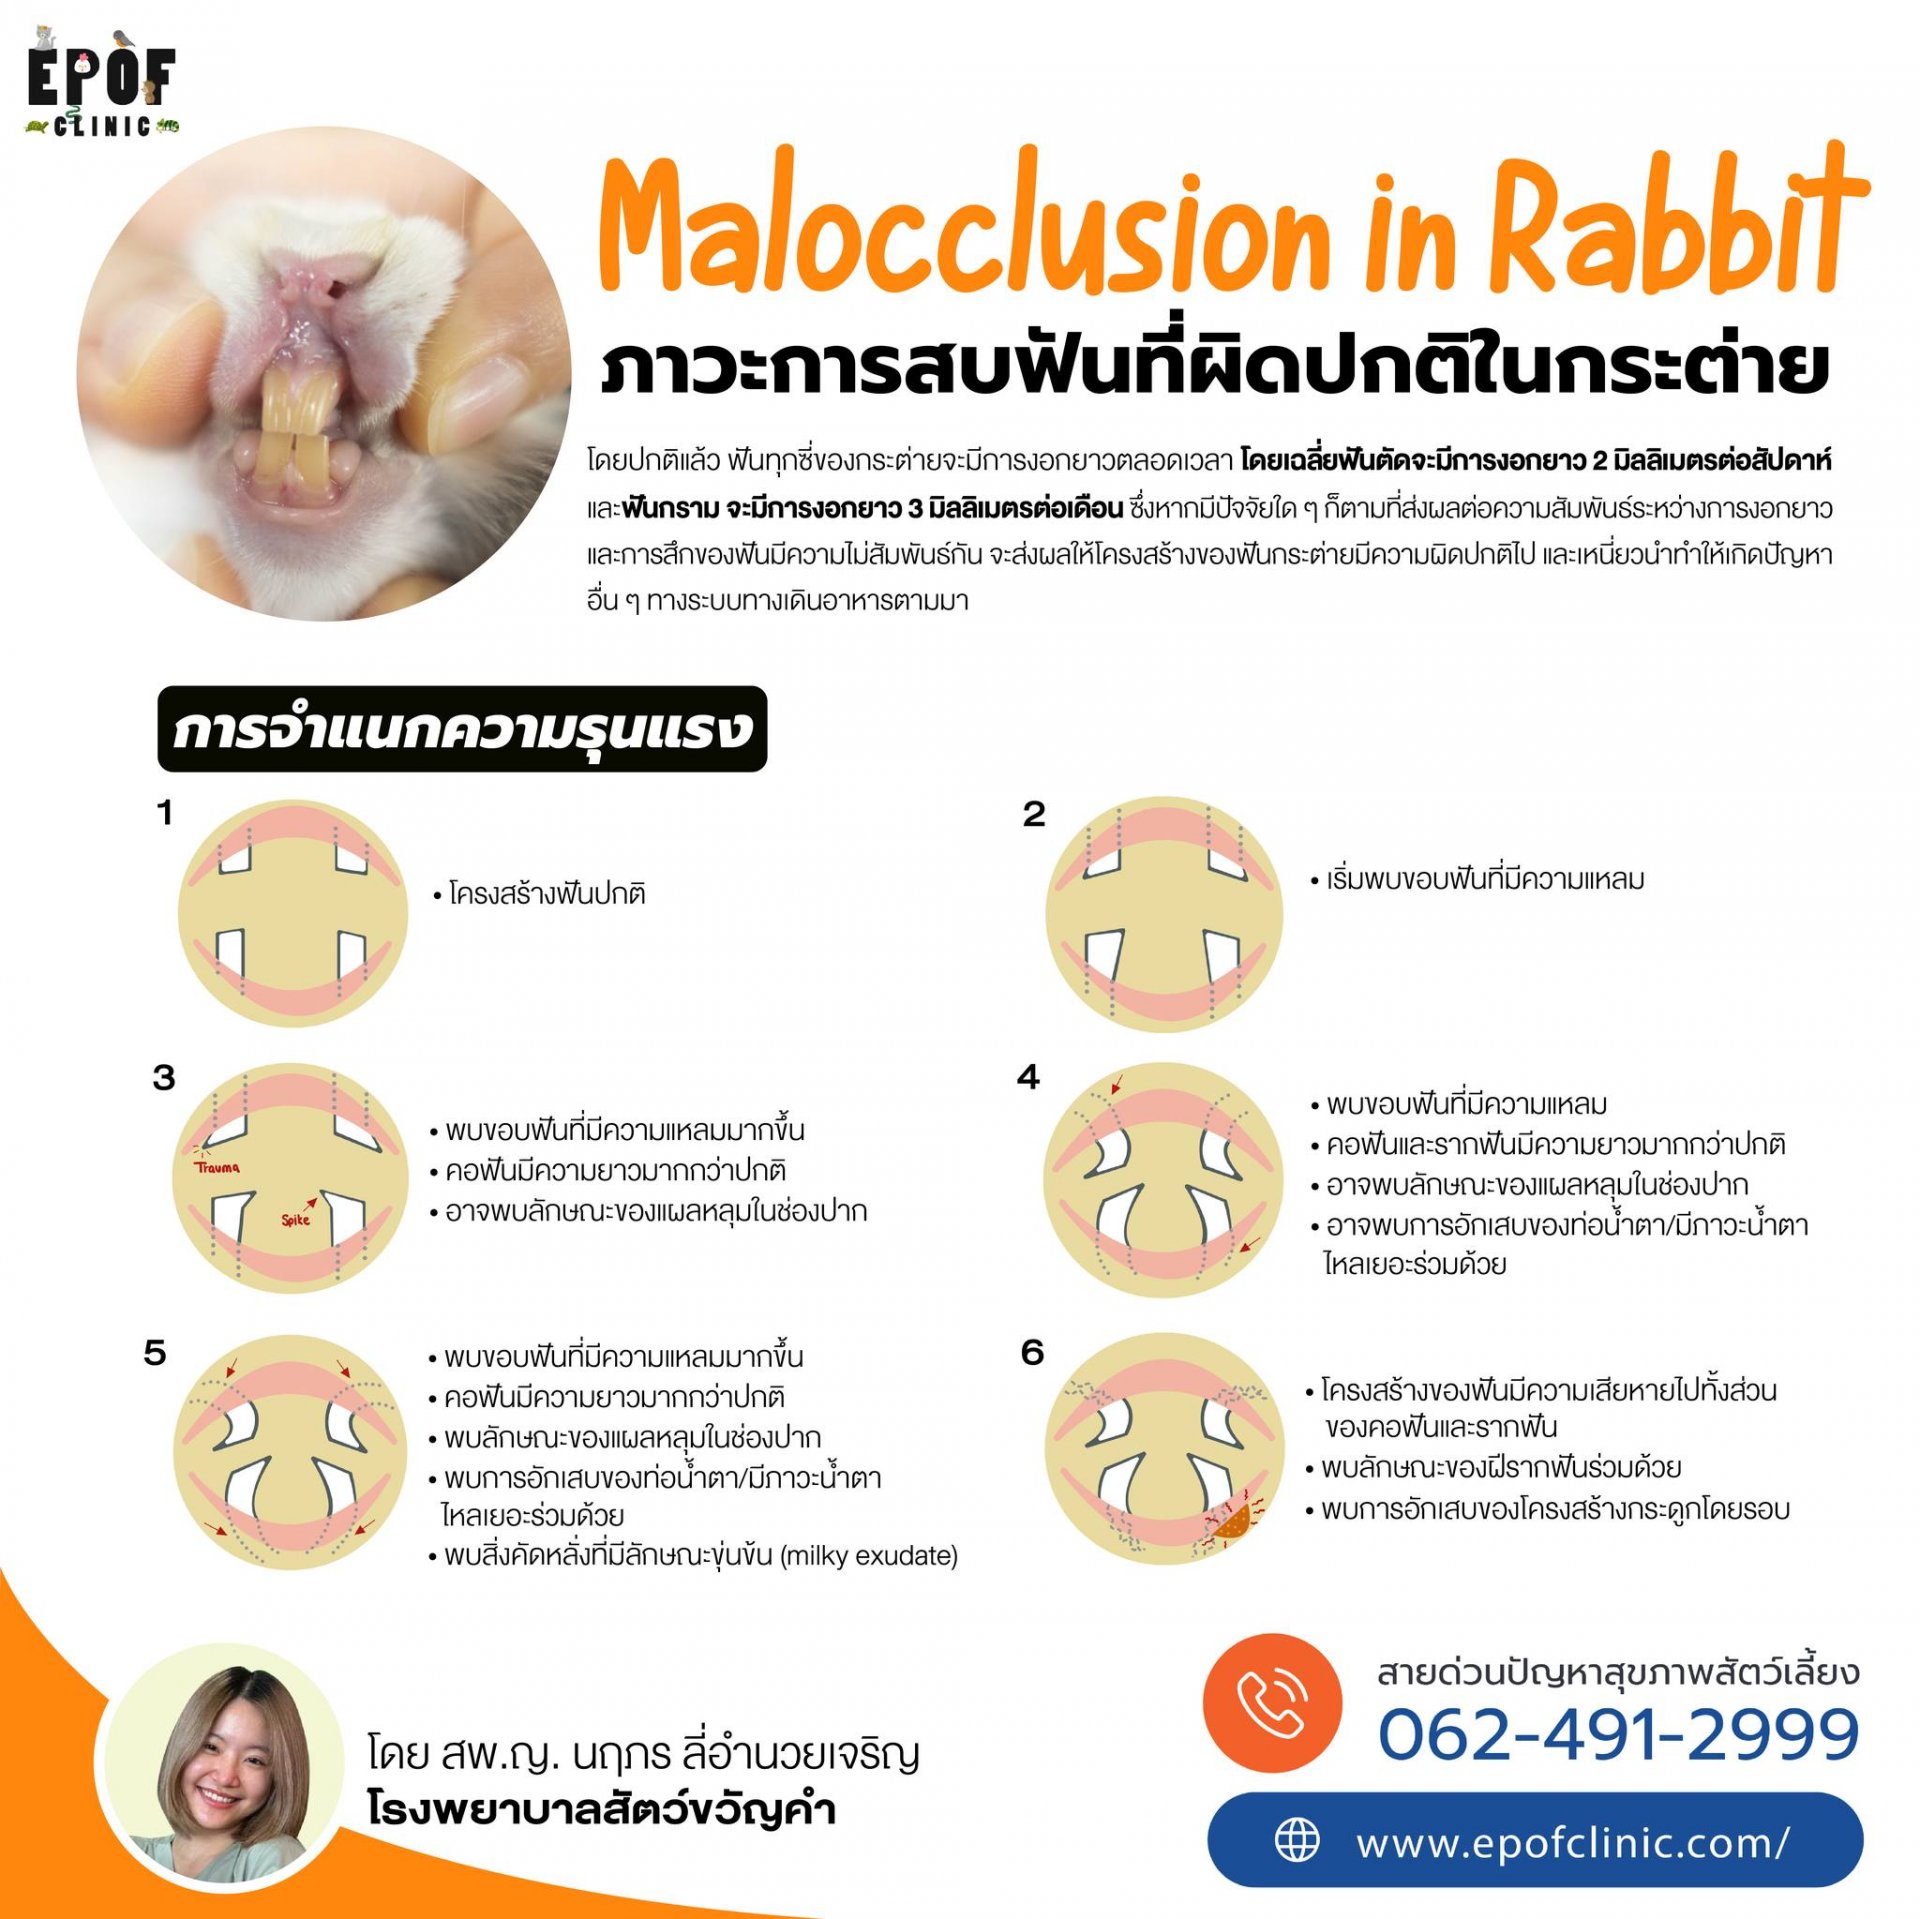 Malocclusion in Rabbit  ภาวะการสบฟันที่่ผิดปกติในกระต่าย